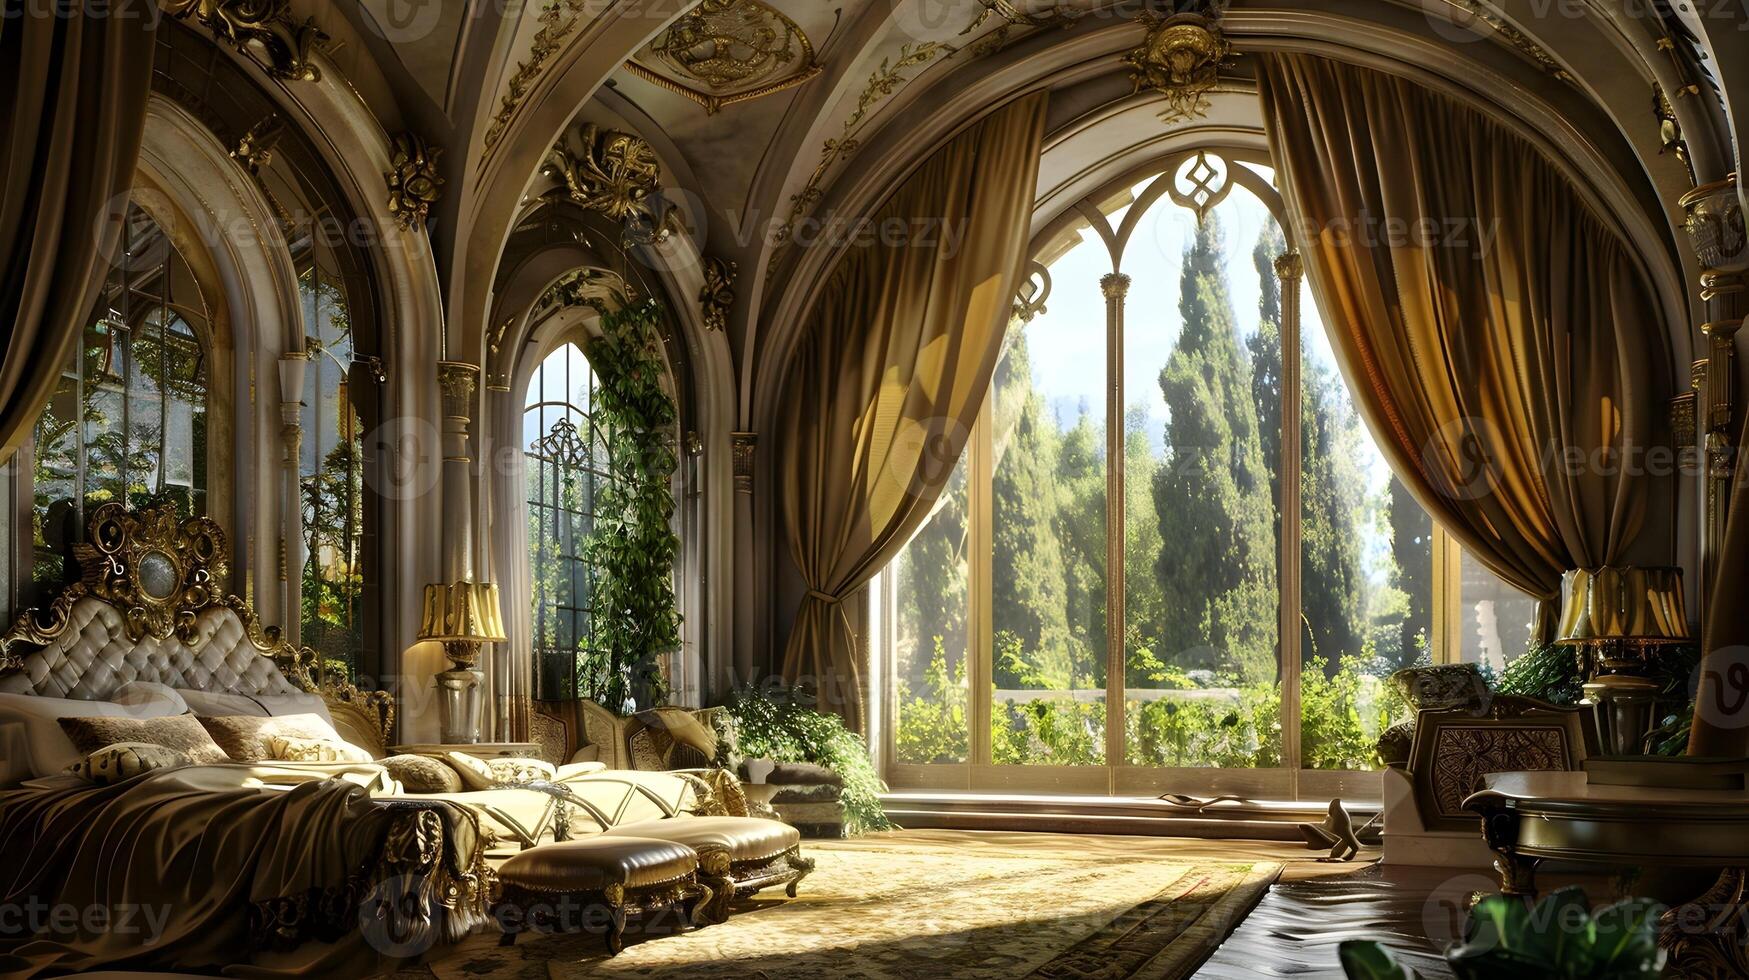 opulento e encantador barroco Palácio interior com exuberante jardim vistas foto